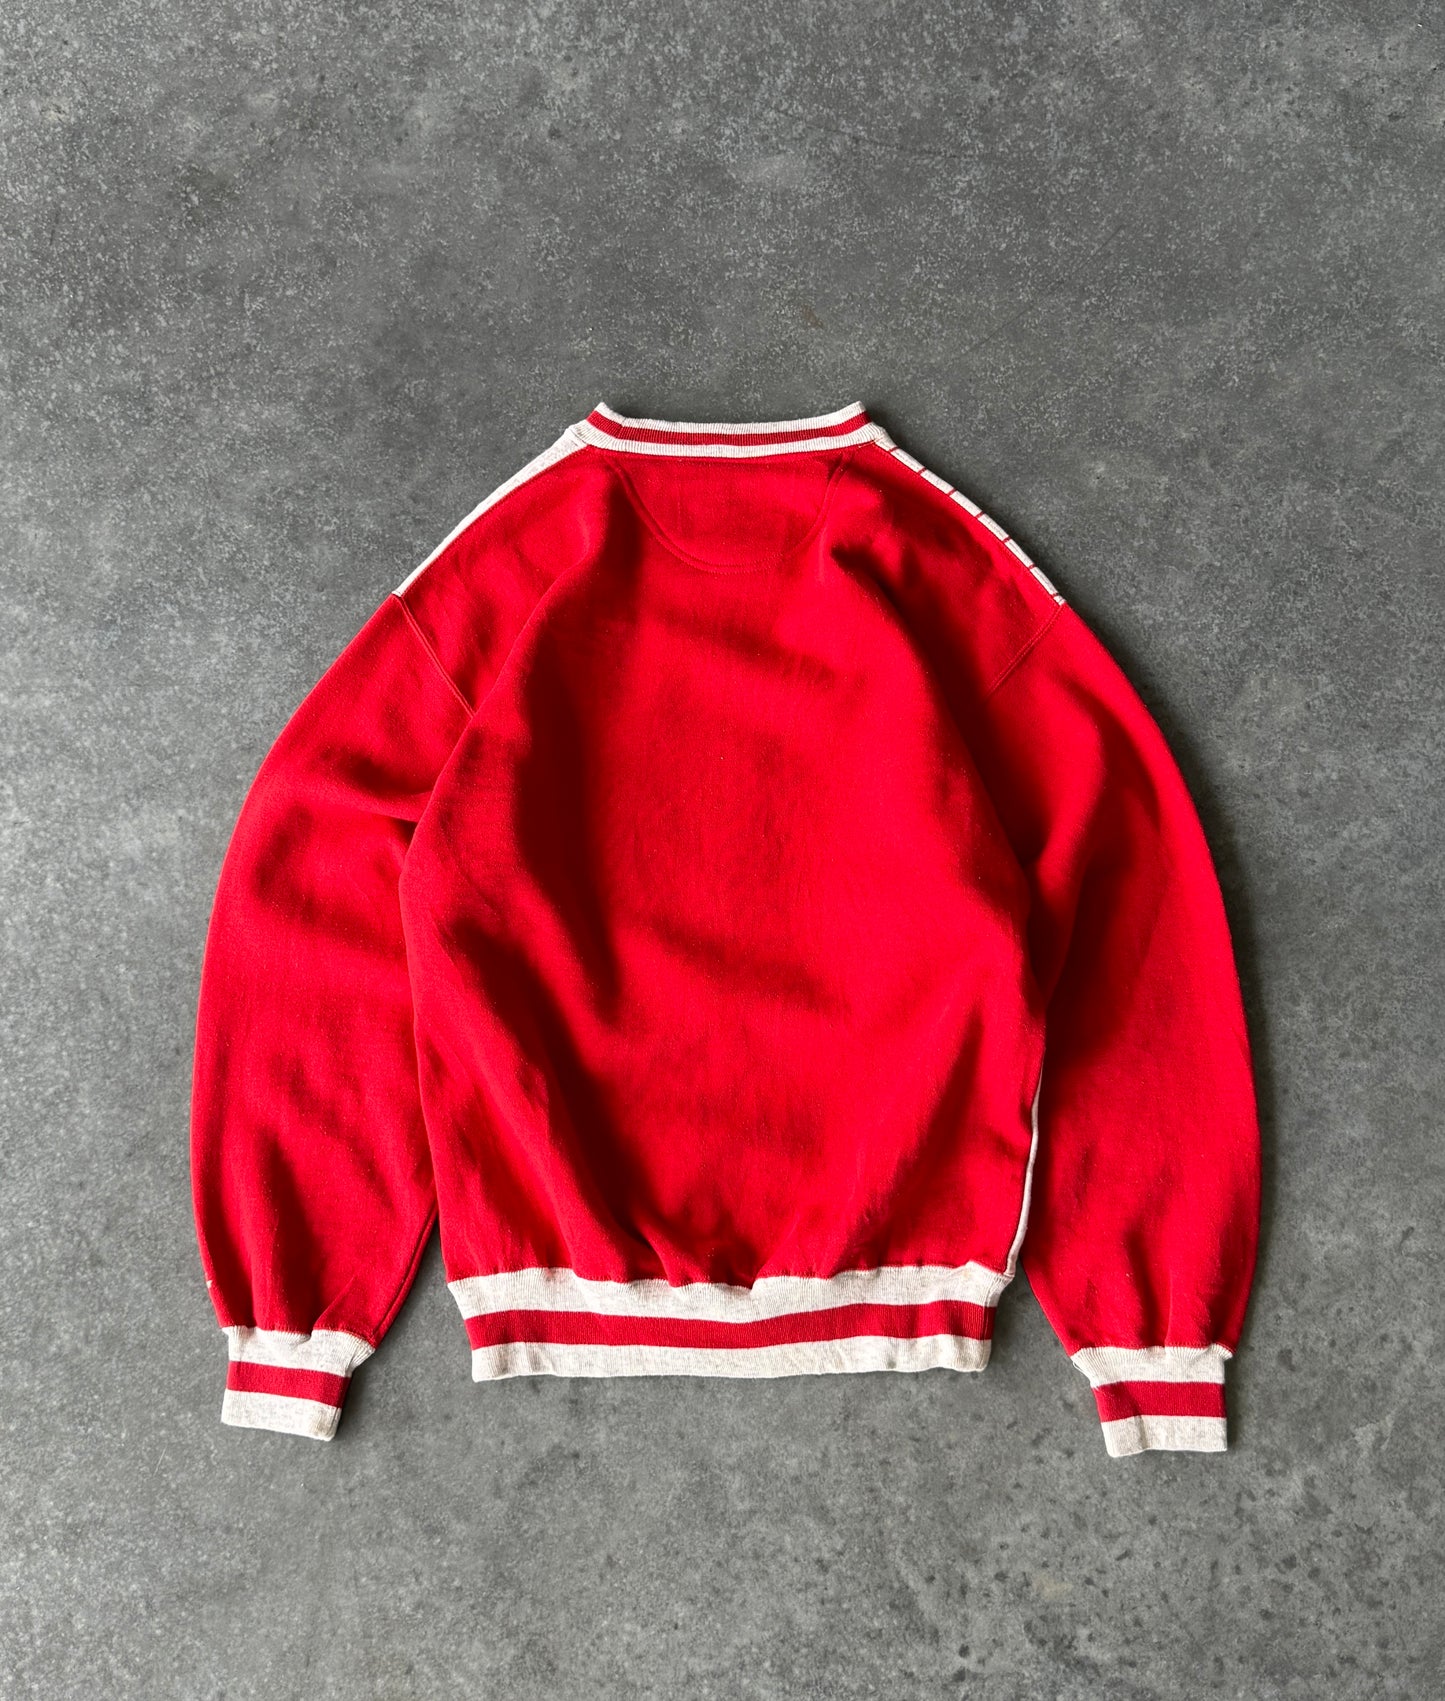 Vintage KC Chiefs Pattern Sweater (L)